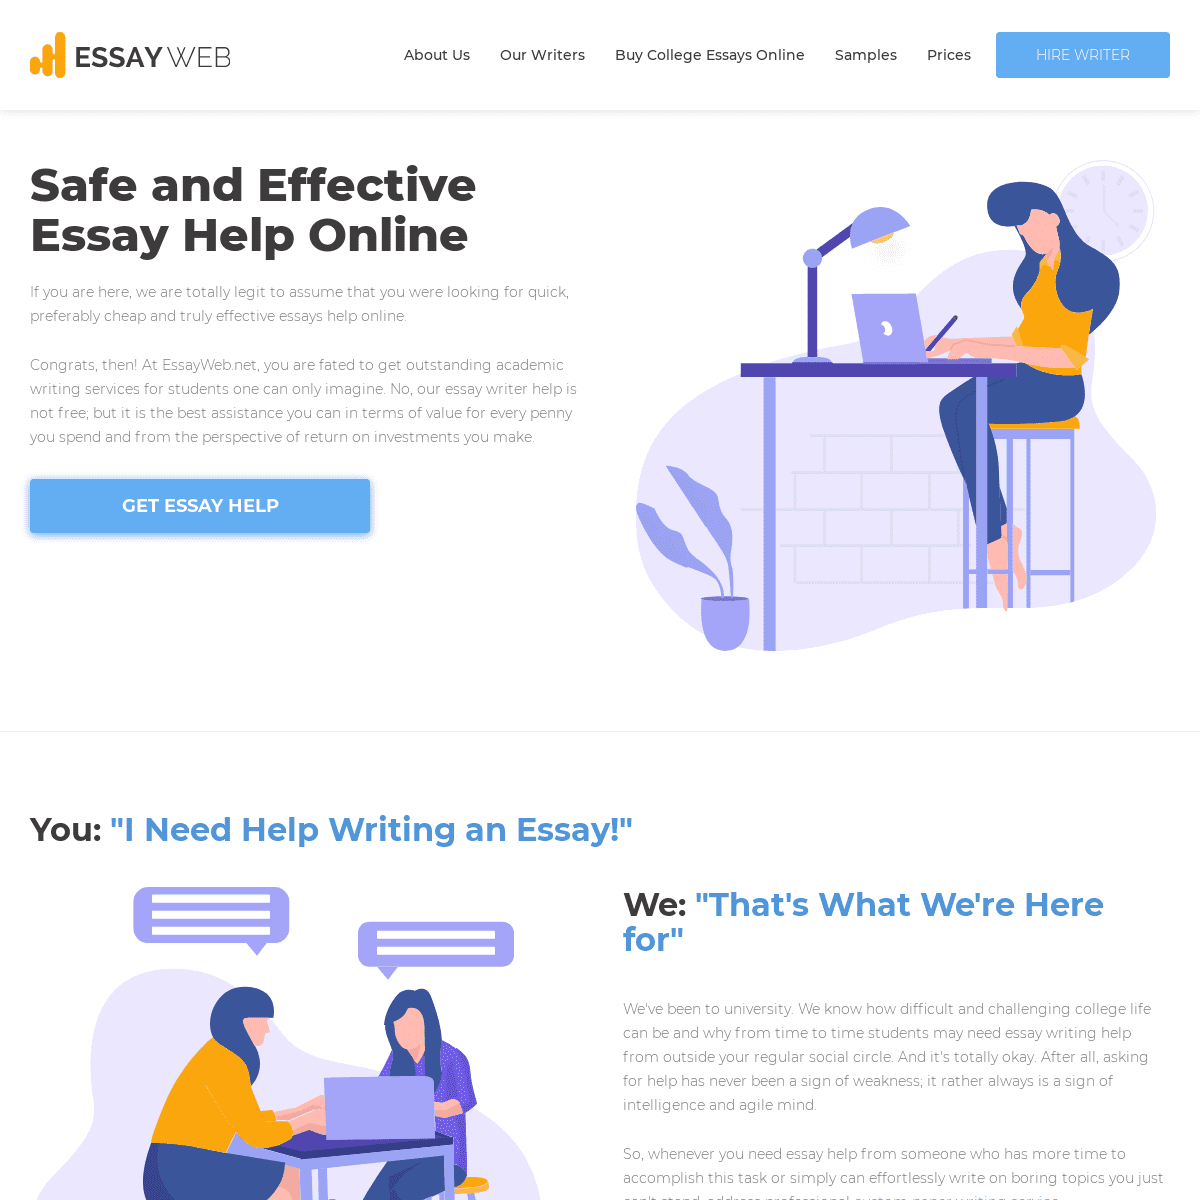 A complete backup of https://essayweb.net